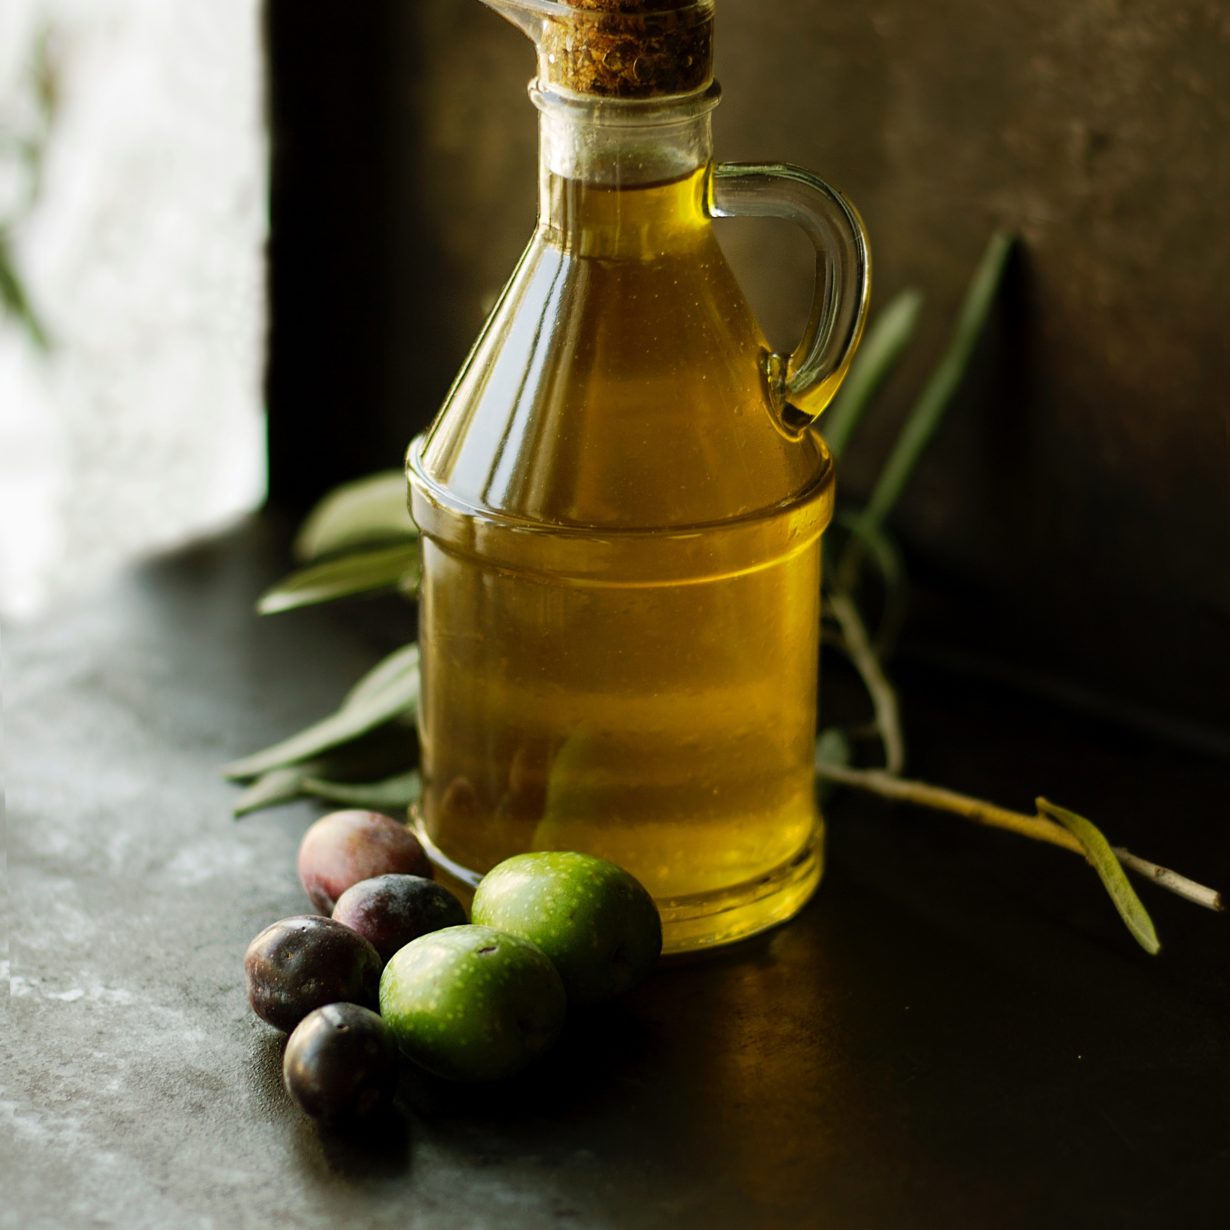 Oil in jar with natural food items by roberta-sorge-unsplash